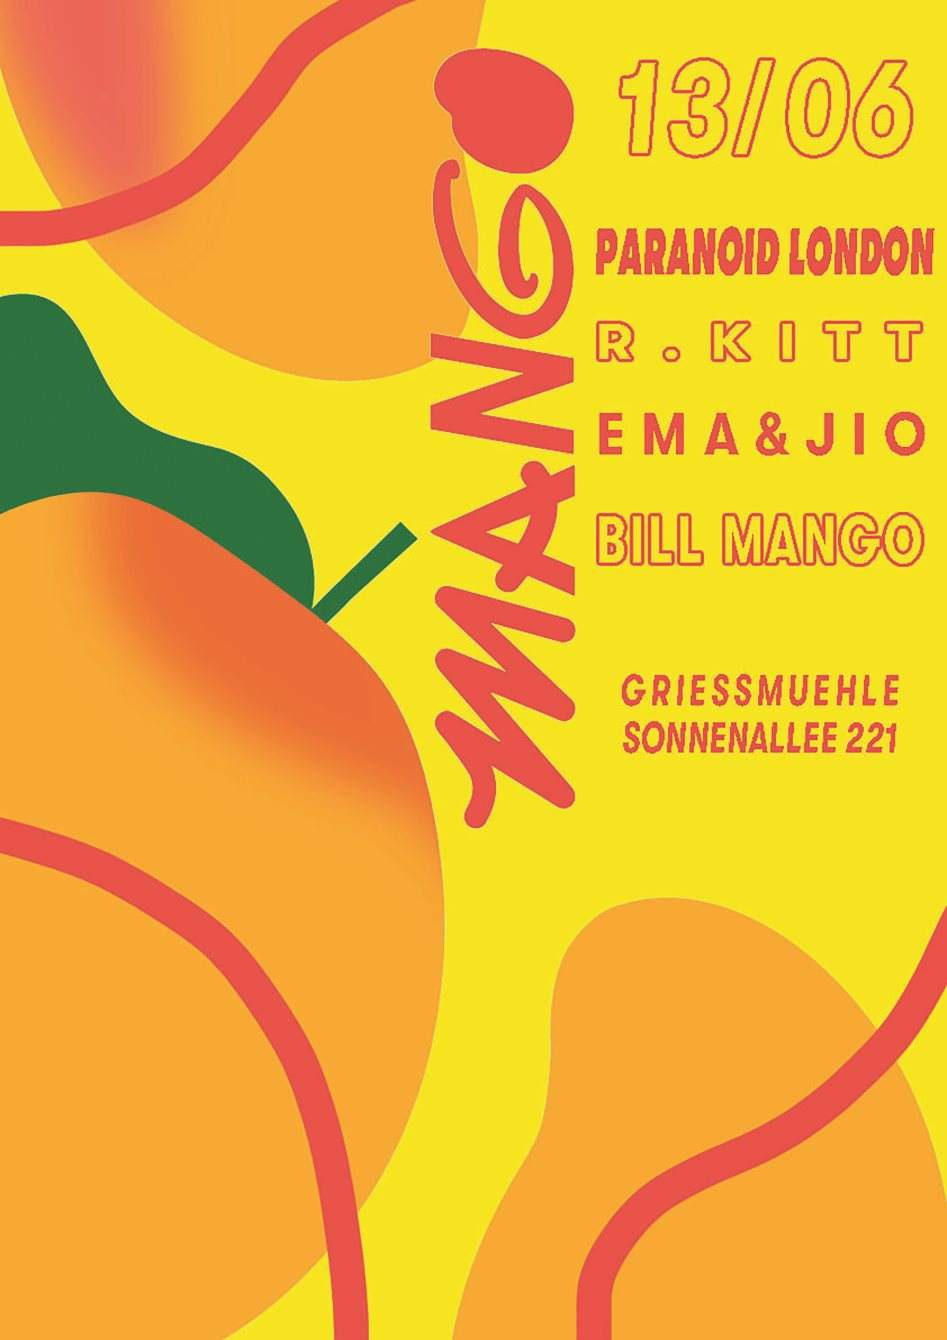 Mango with Paranoid London - フライヤー裏